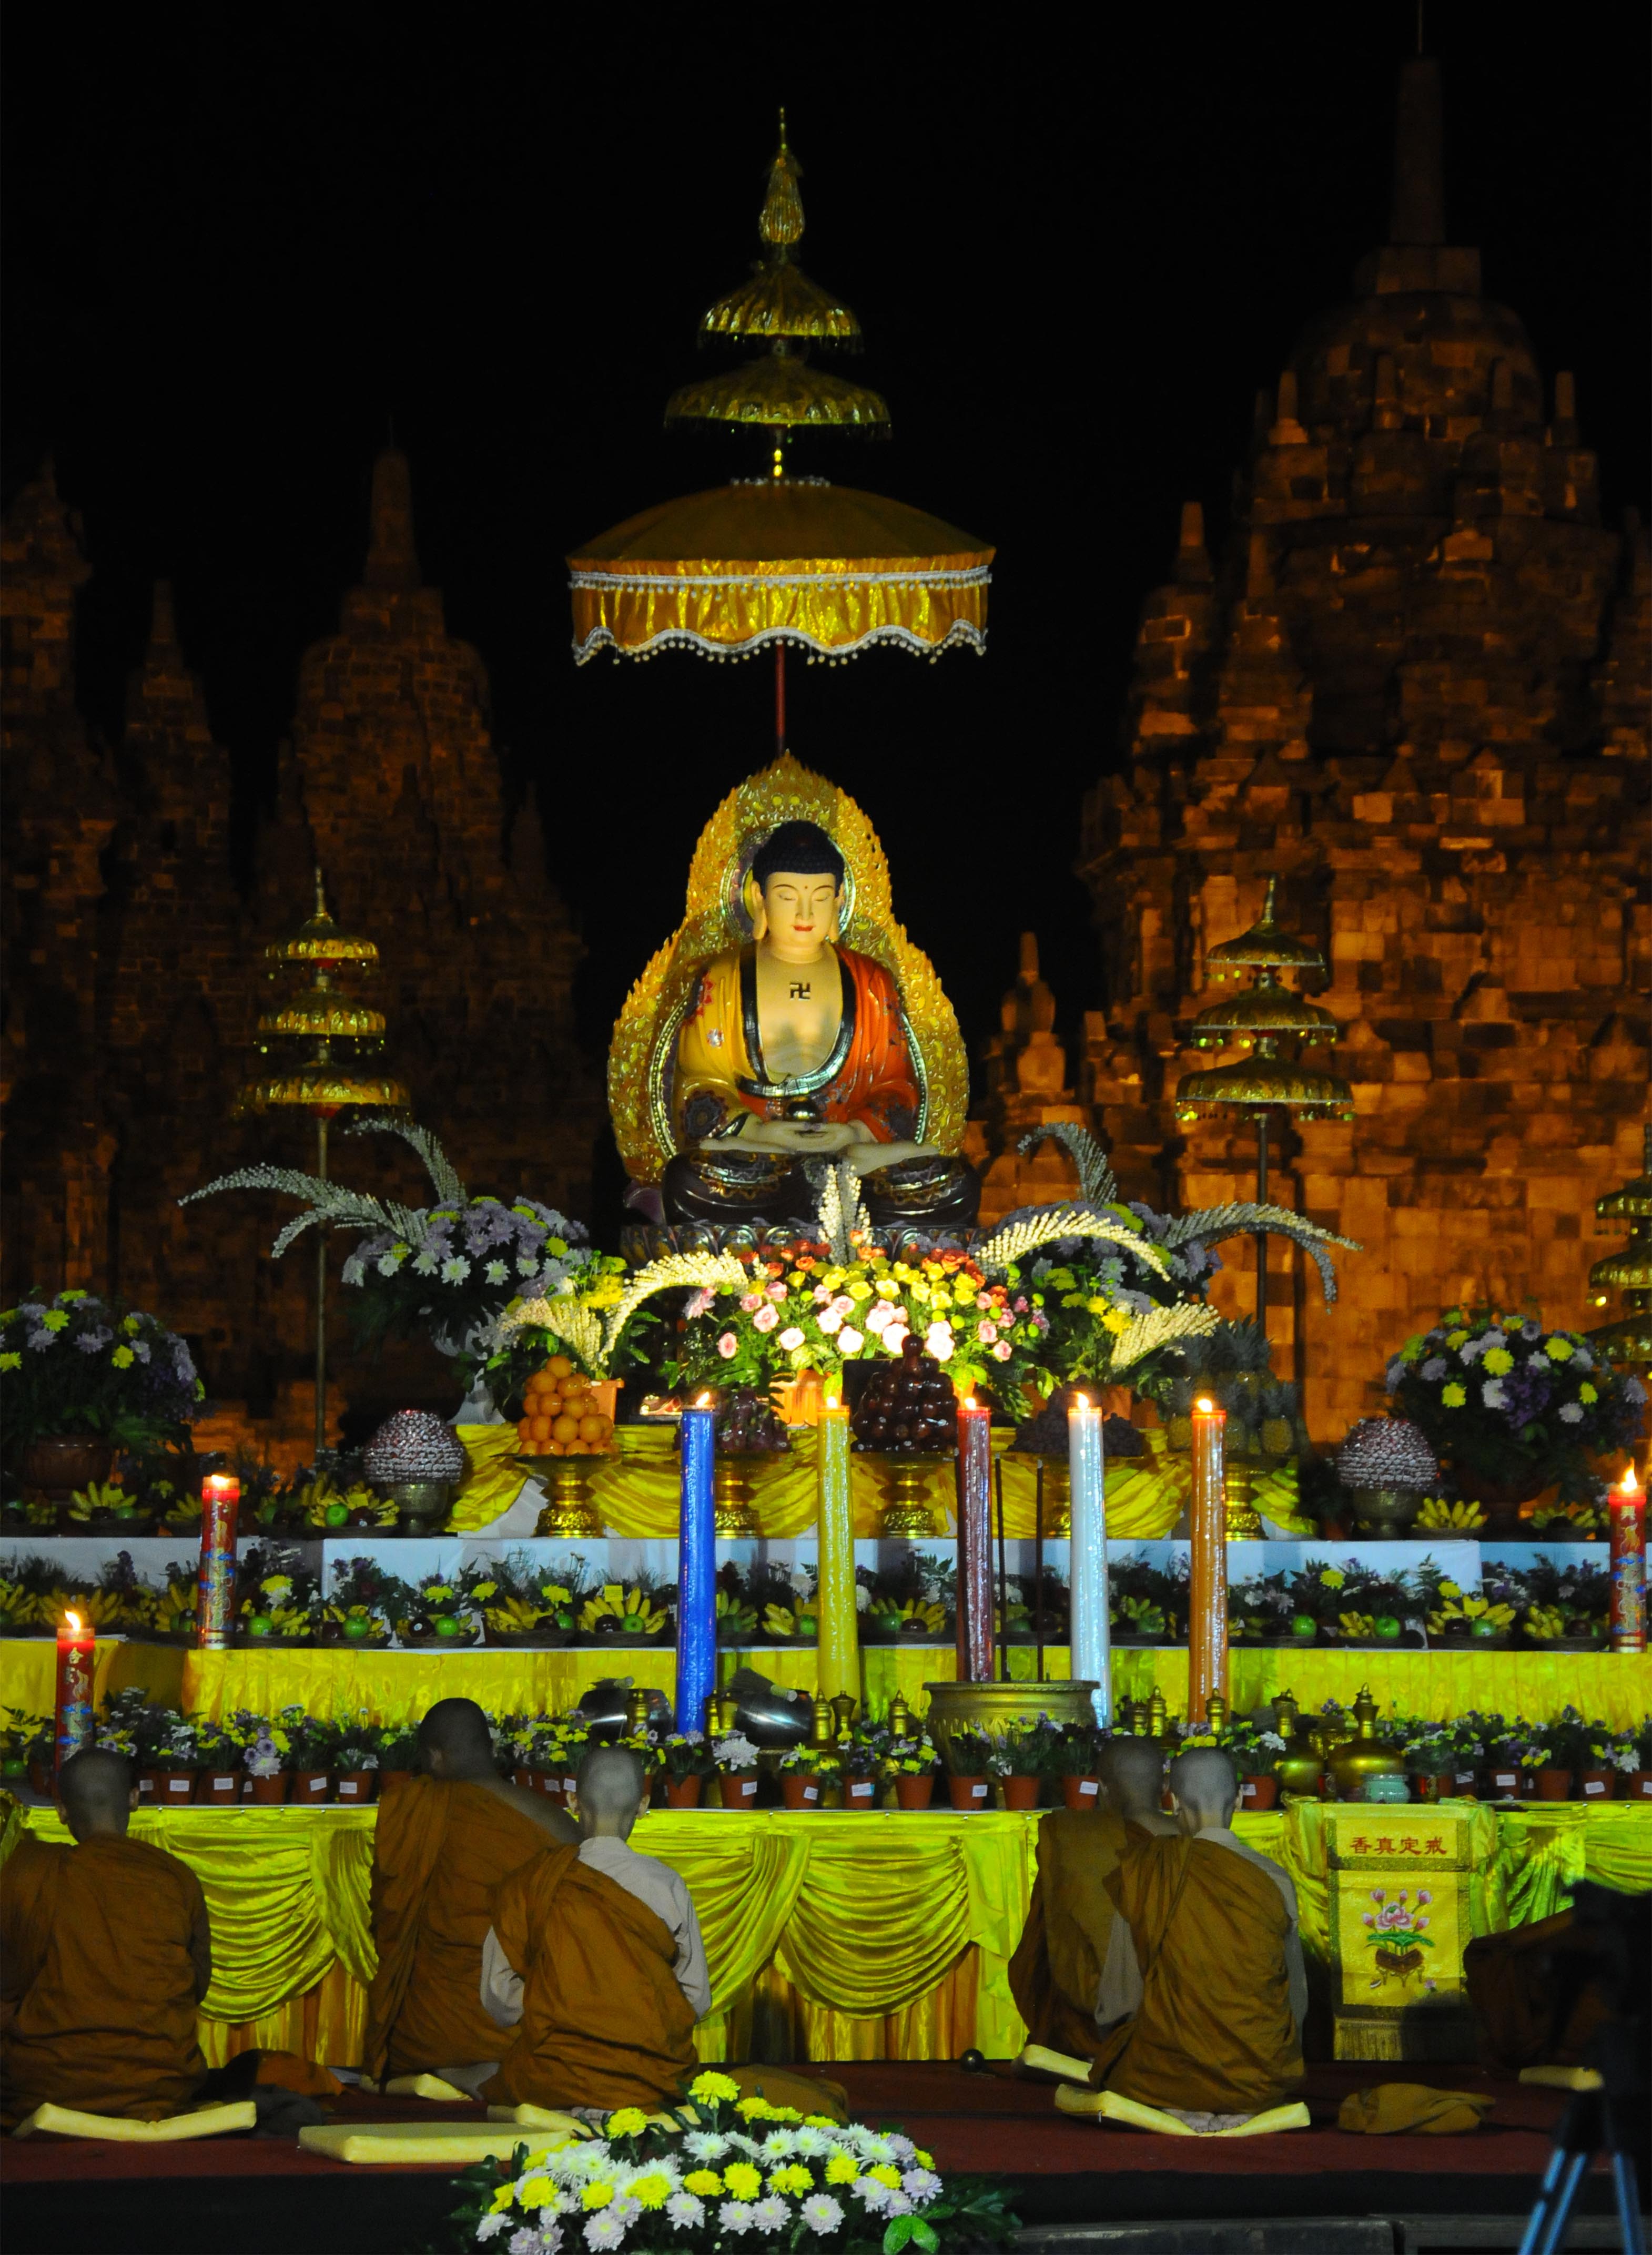 Sejumlah biksu membacakan ritual Mantra di depan altar patung Budha saat melakukan rangkaian ritual malam Waisak di Candi Sewu, Prambanan, Klaten, Jawa Tengah, pada 21 Mei 2016. Foto oleh Aloysius Jarot Nugroho/Antara   